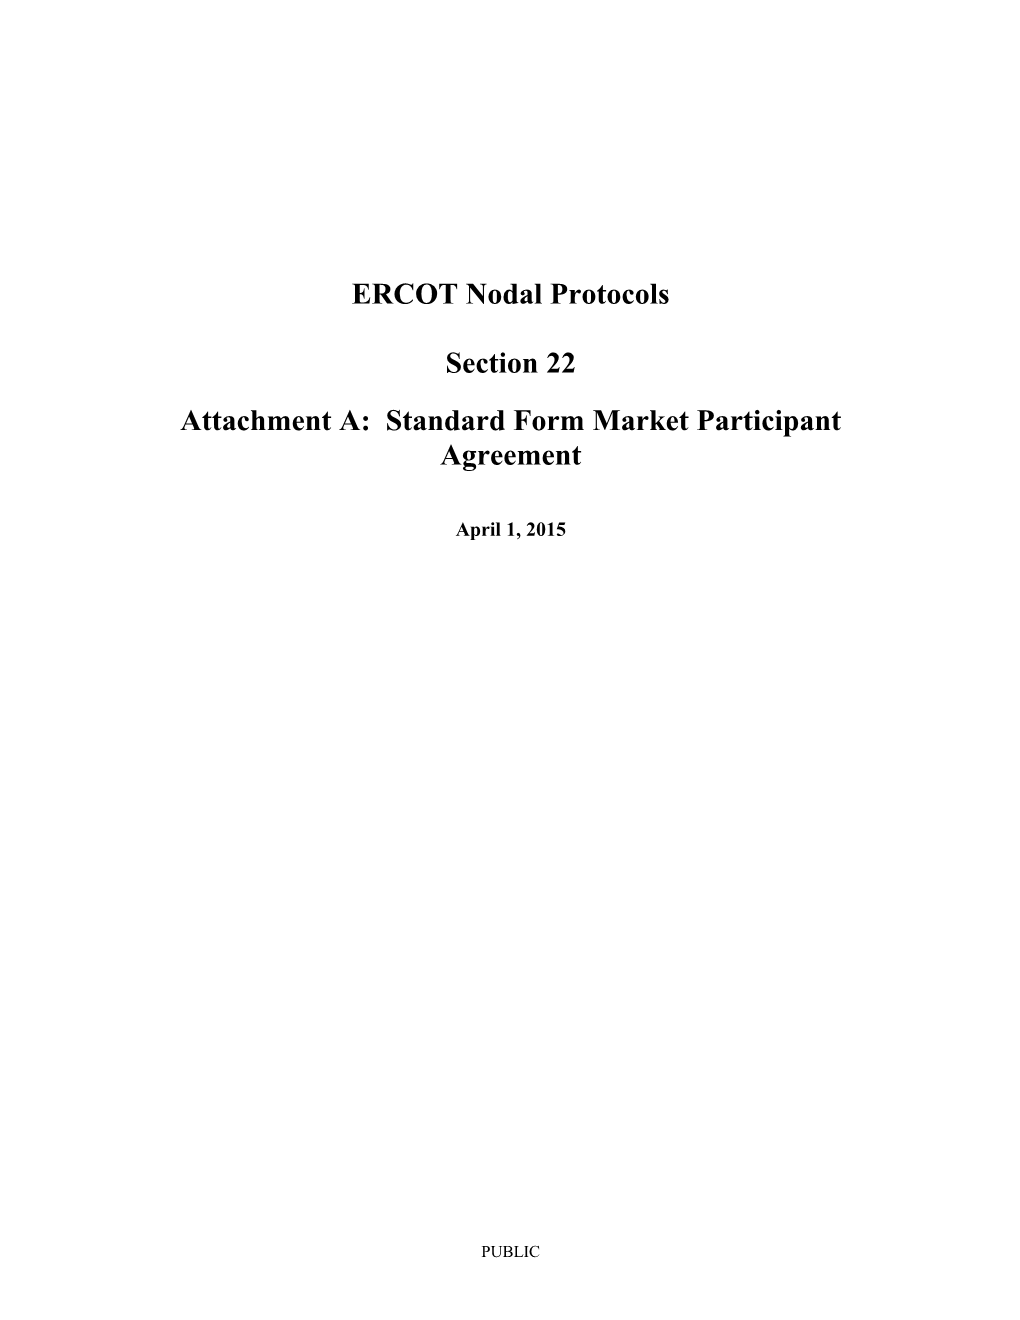 Section 22 (A): Standard Form Market Participant Agreement